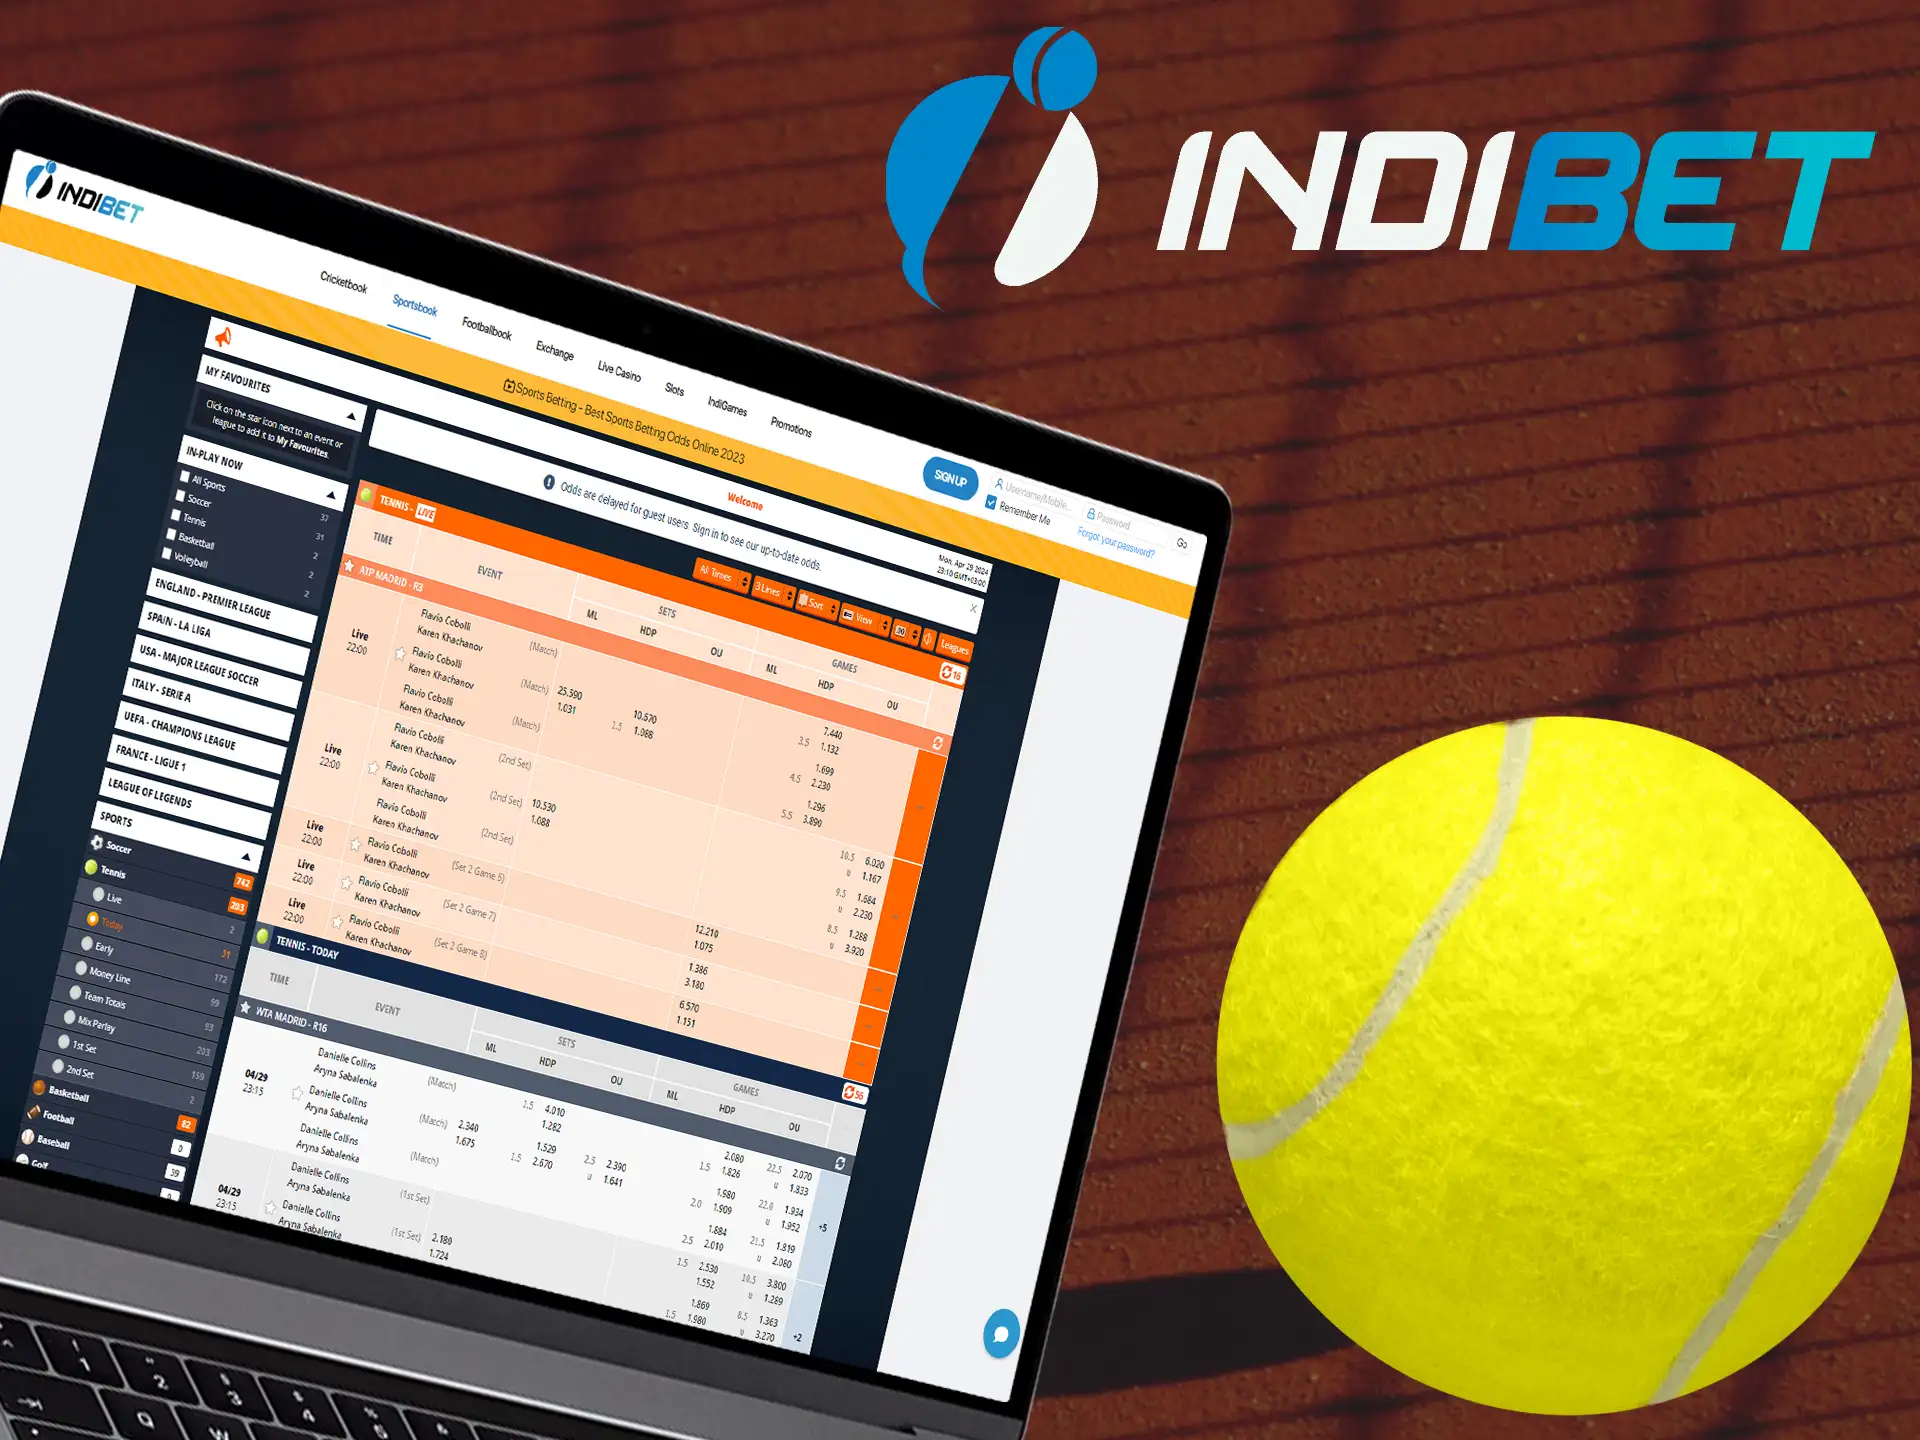 Indibet offers betting opportunities on major tennis tournaments.